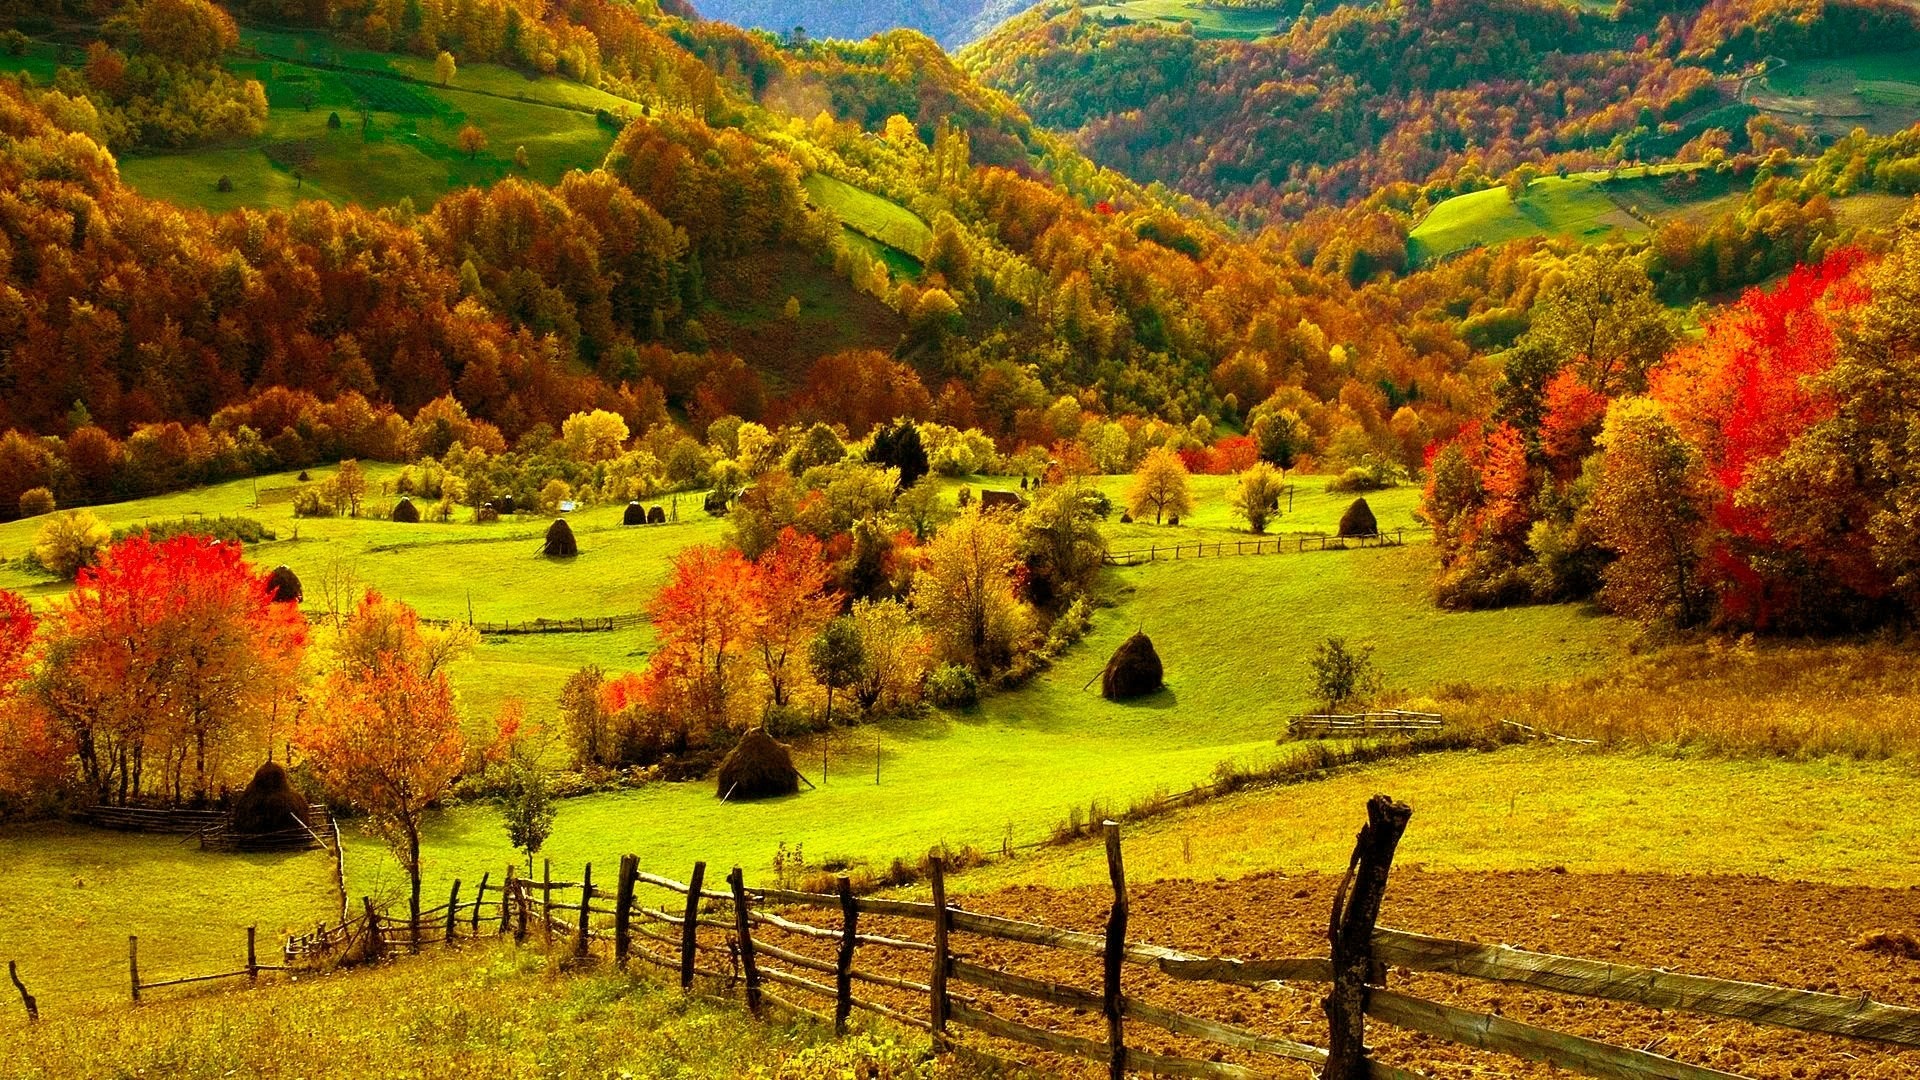 http://eskipaper.com/images/fall-scenery-3.jpg